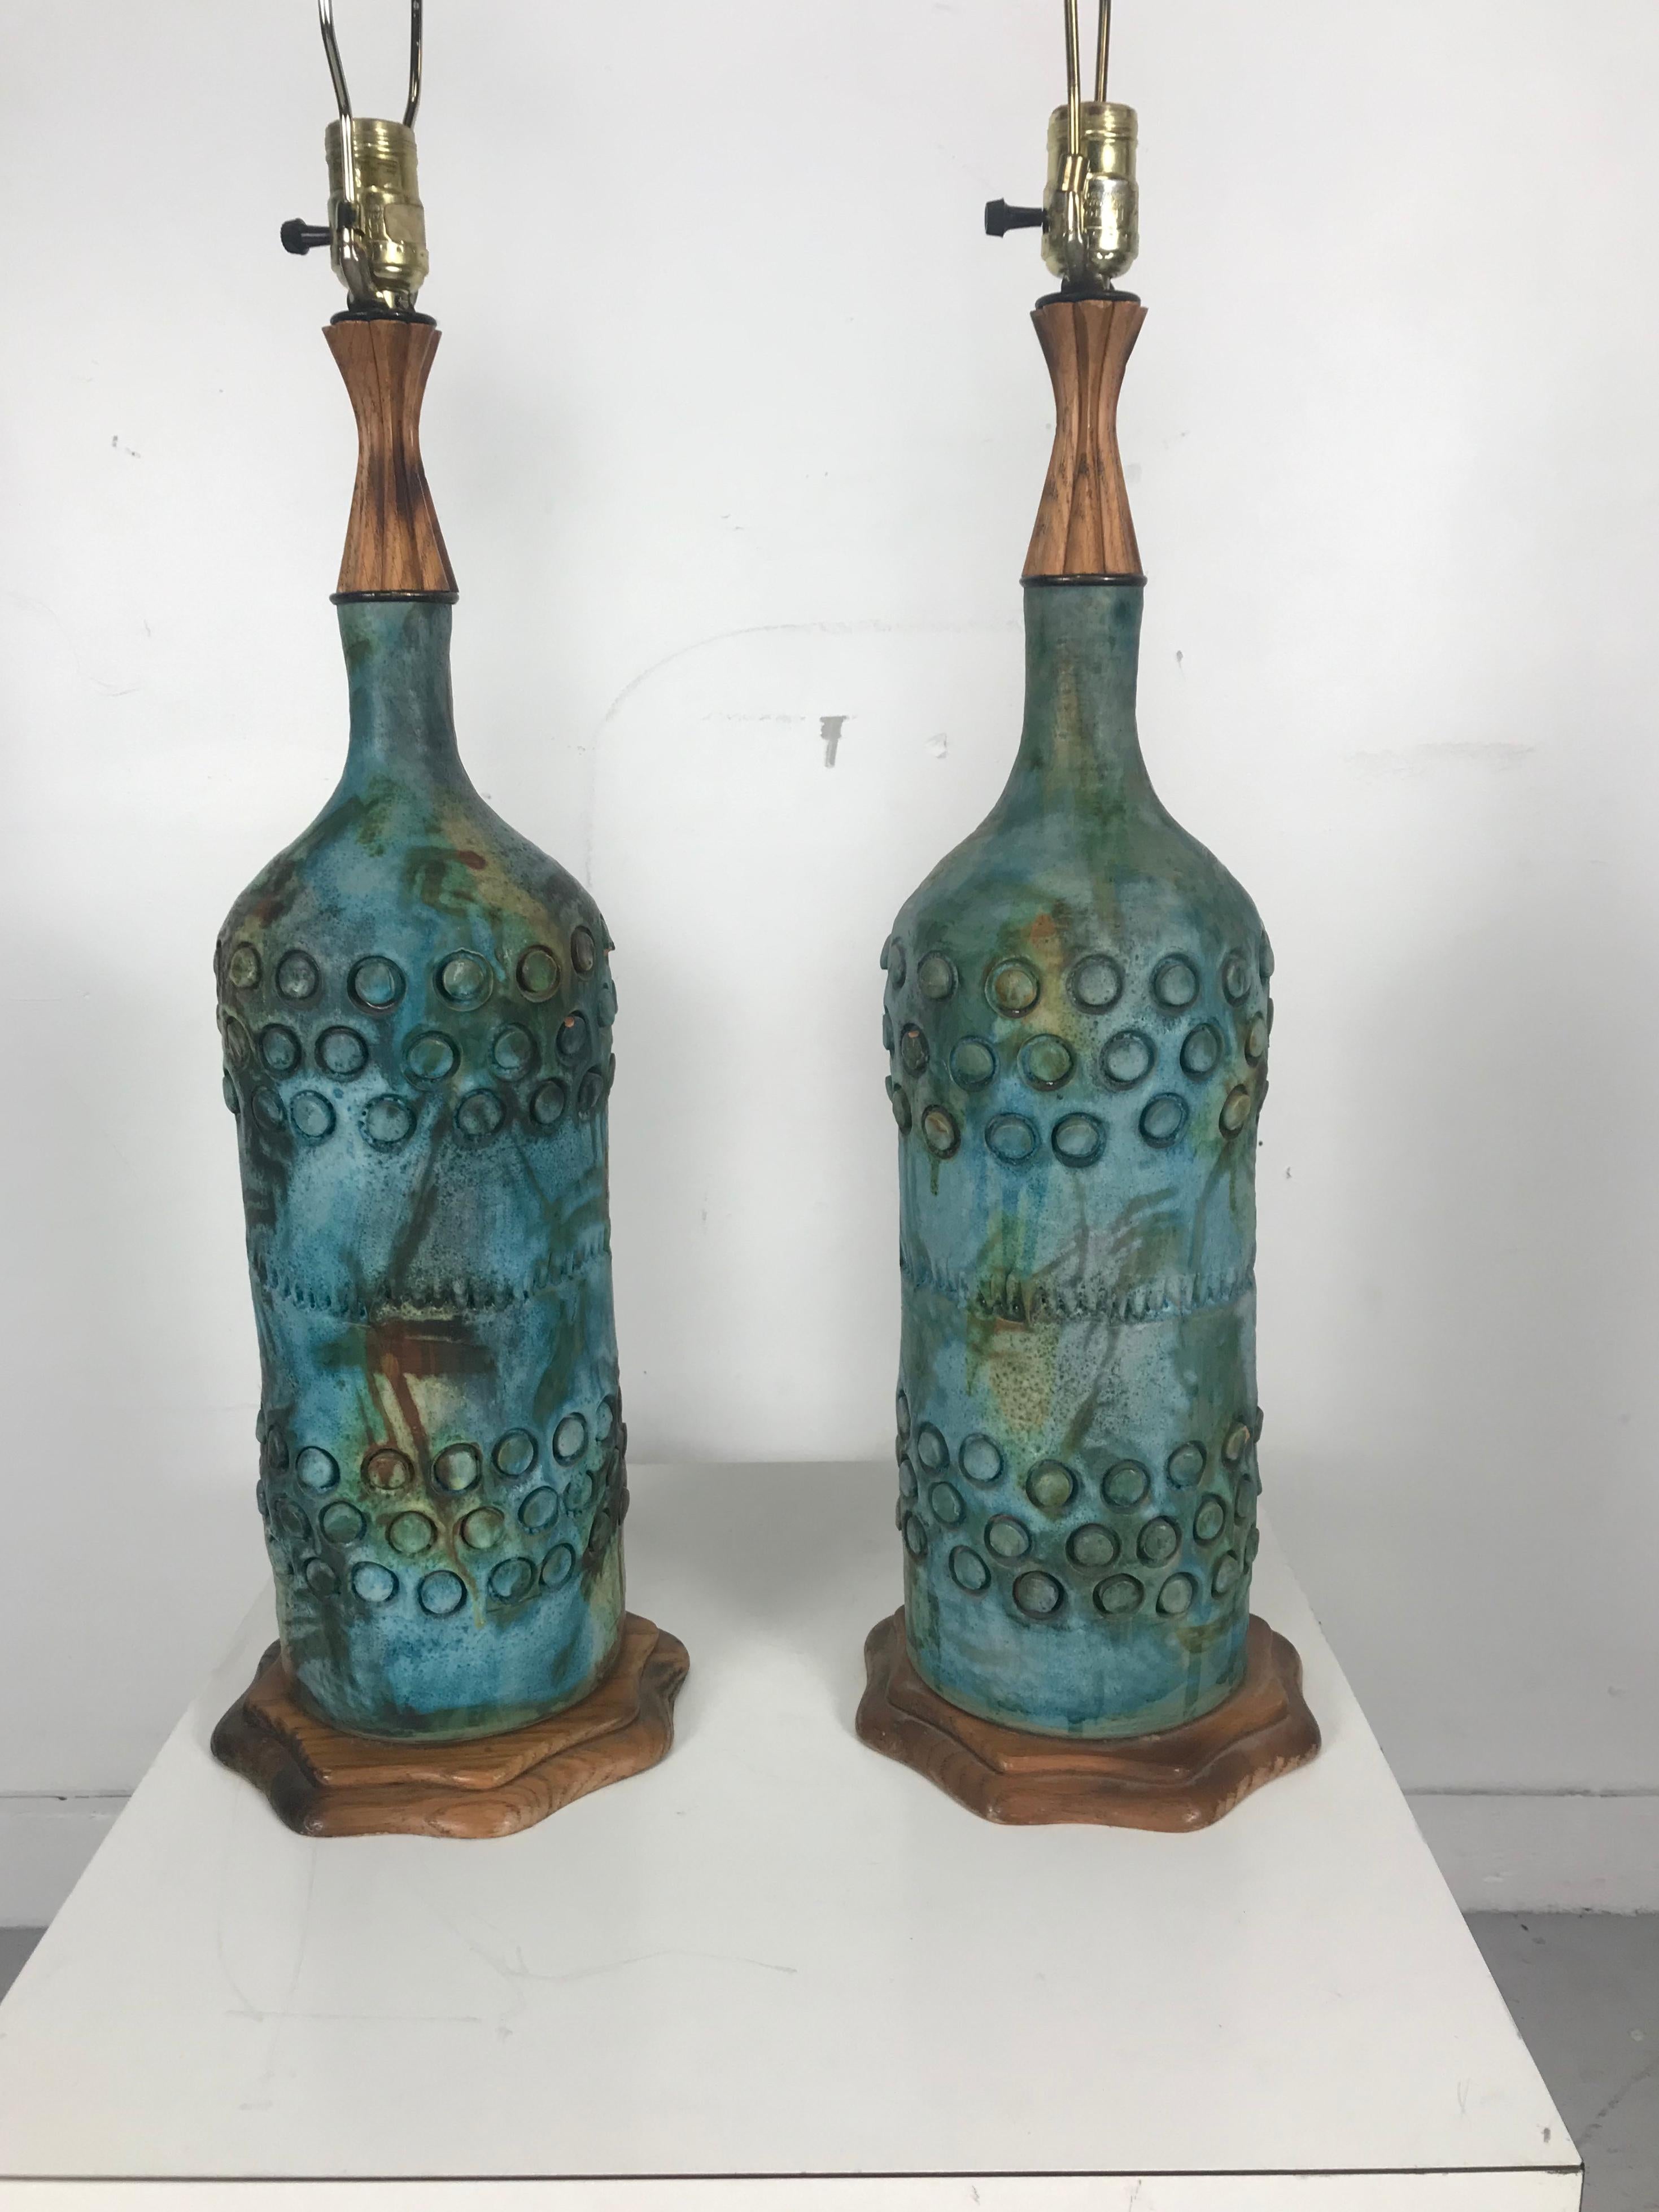 Pair of Raymor Italian Ceramic Pottery Lamps by Alvino Bagni 1